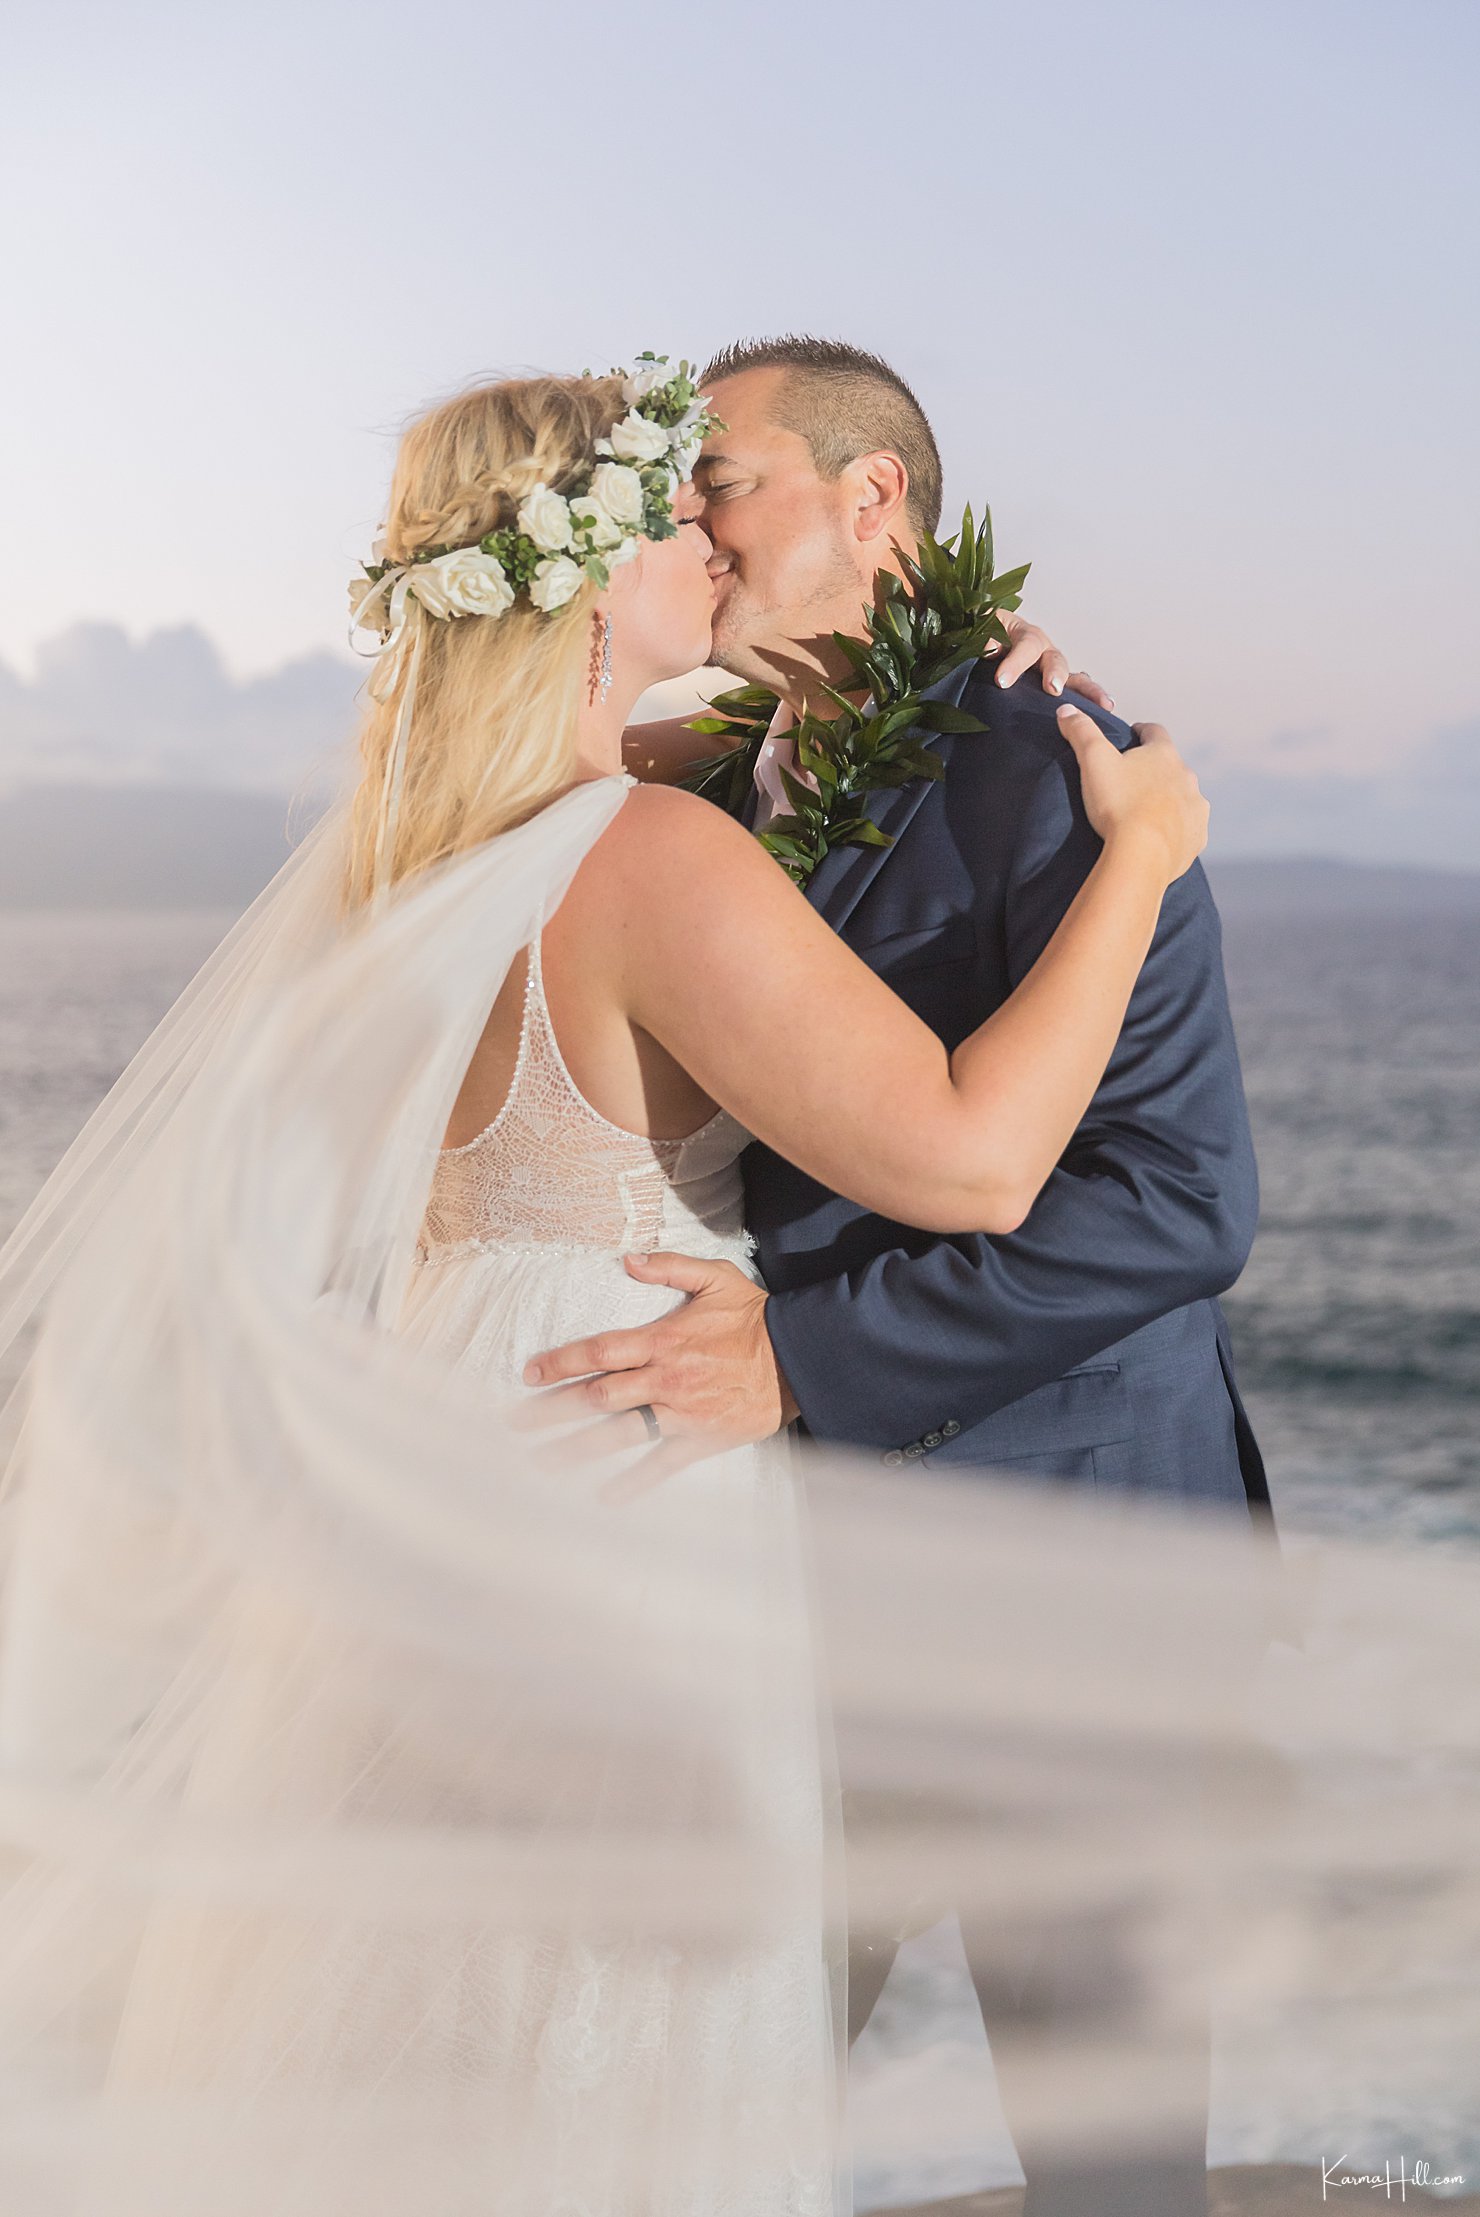 Maui beach wedding locations